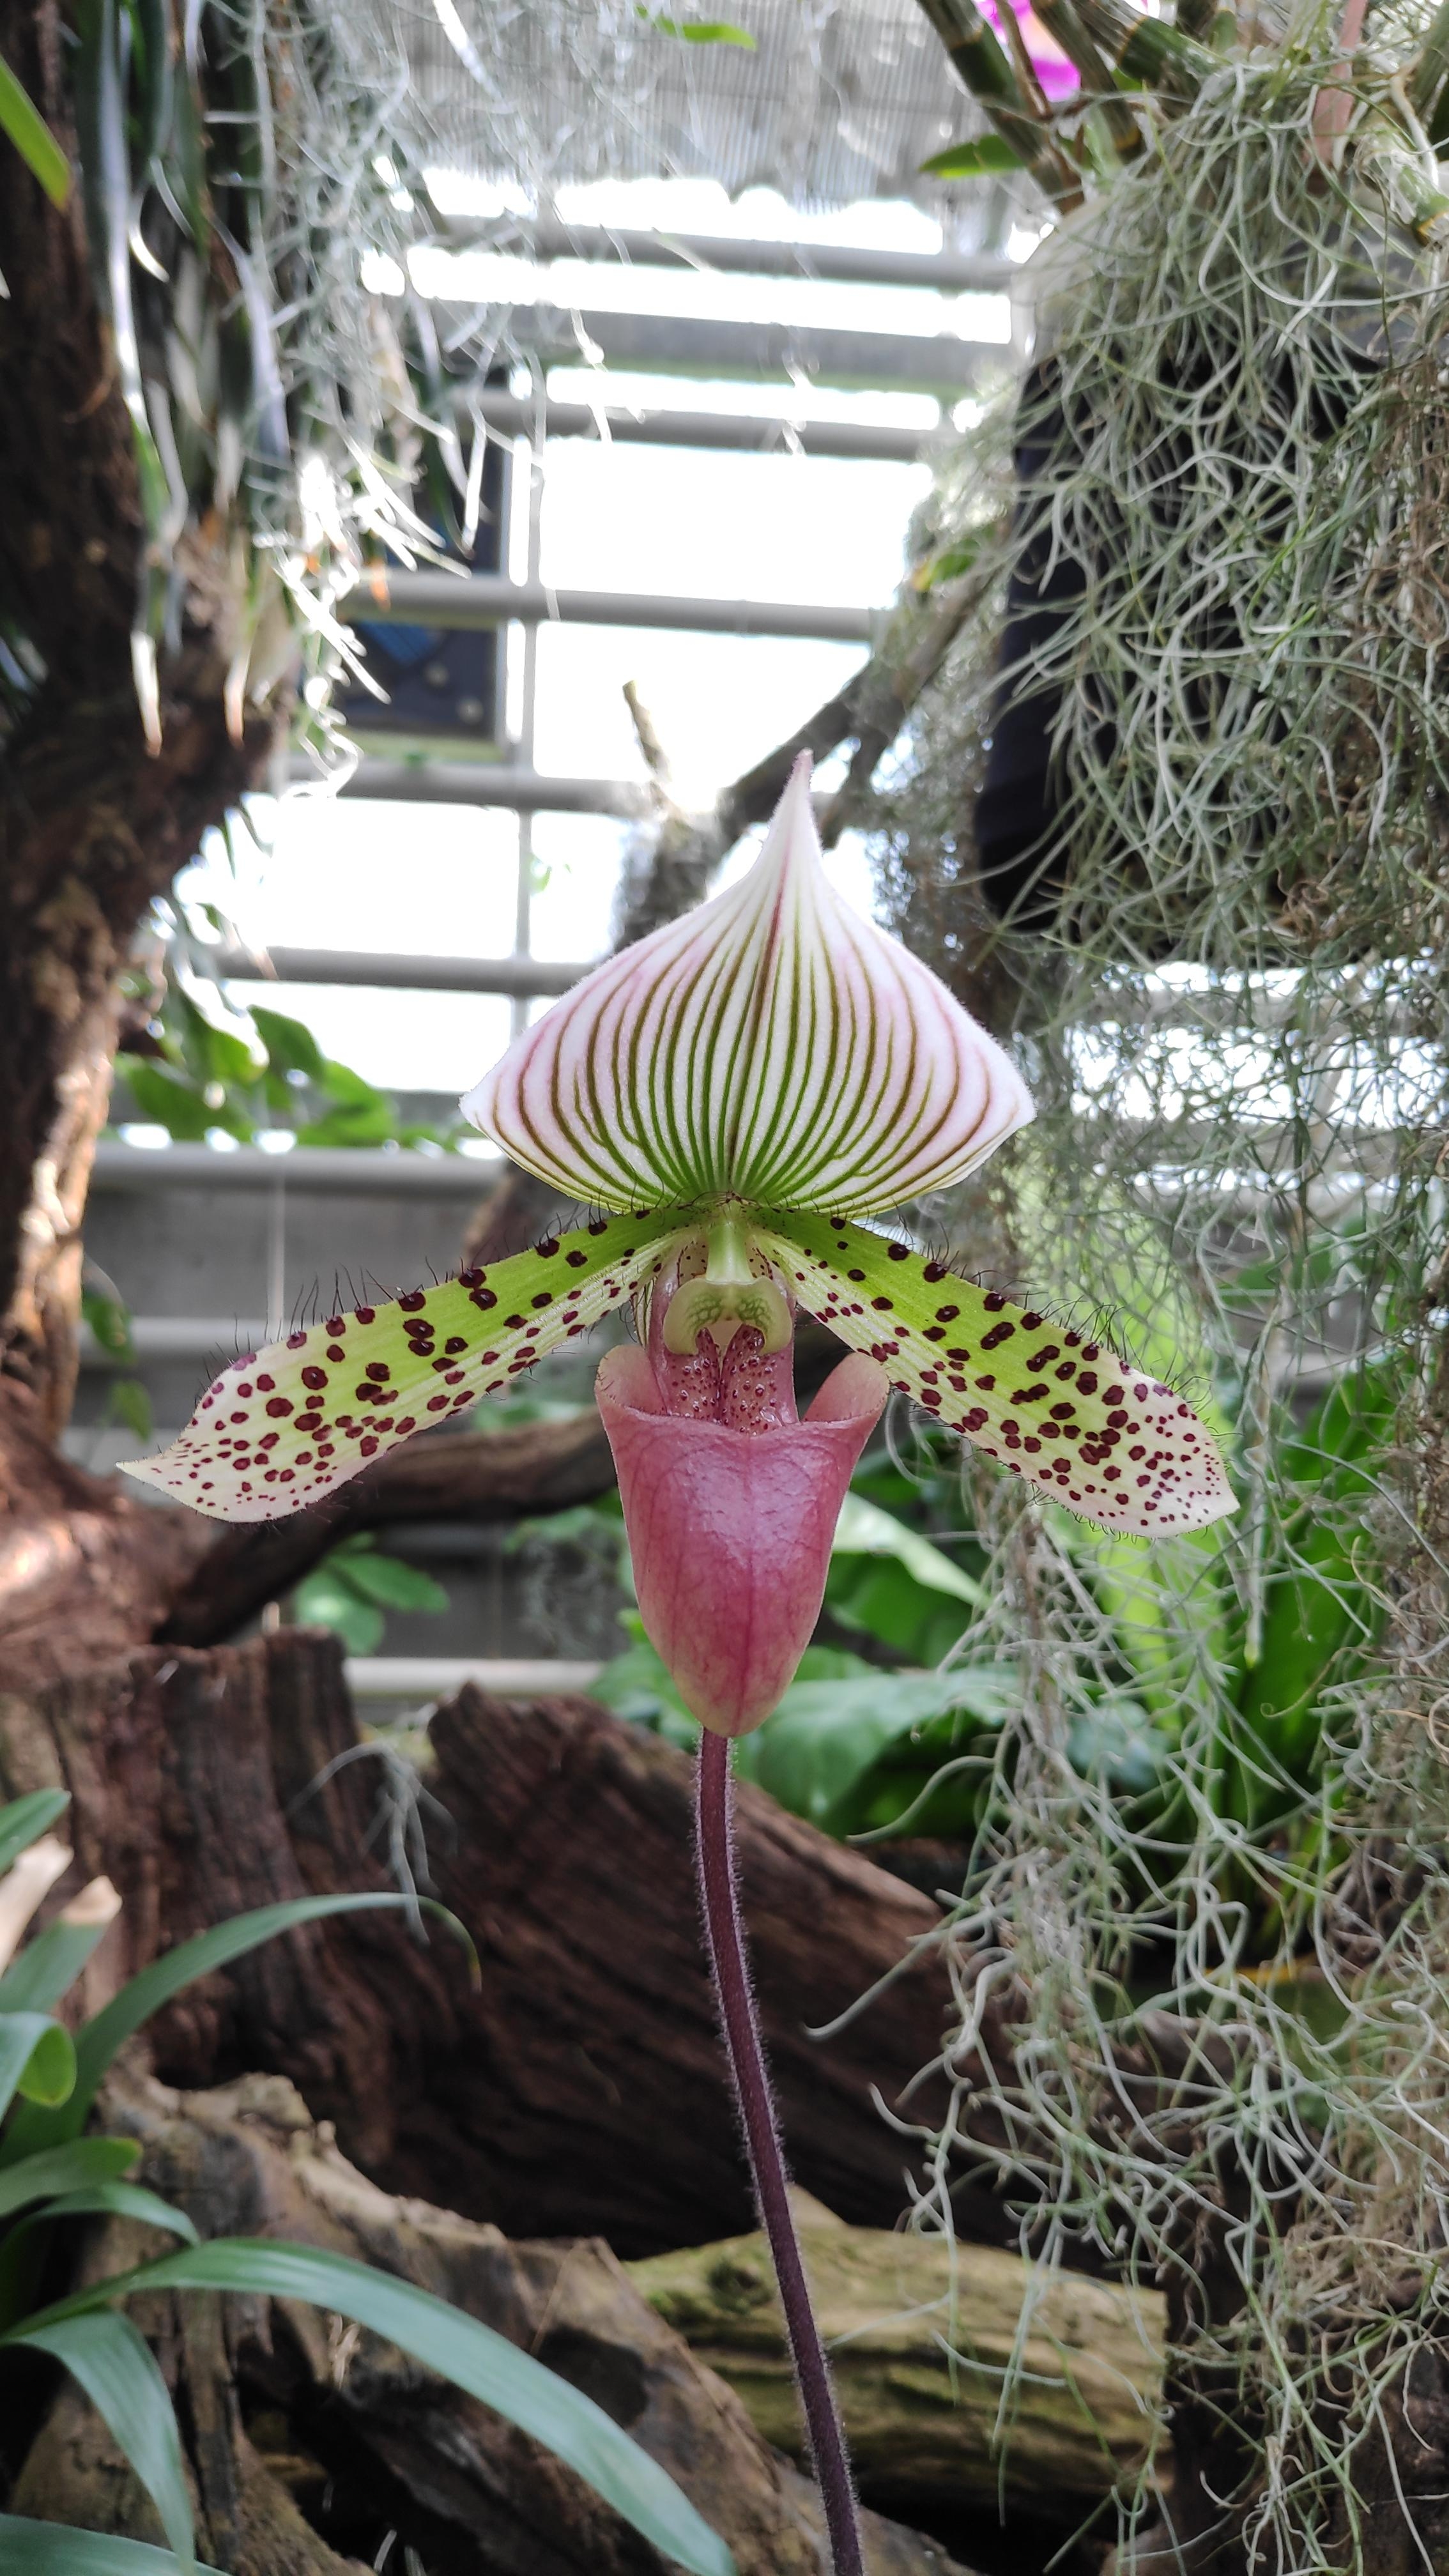 .Orchidee.
#Orchidee #Blume #Blüte #Natur #Ausstellung #Farbenpracht #Muster